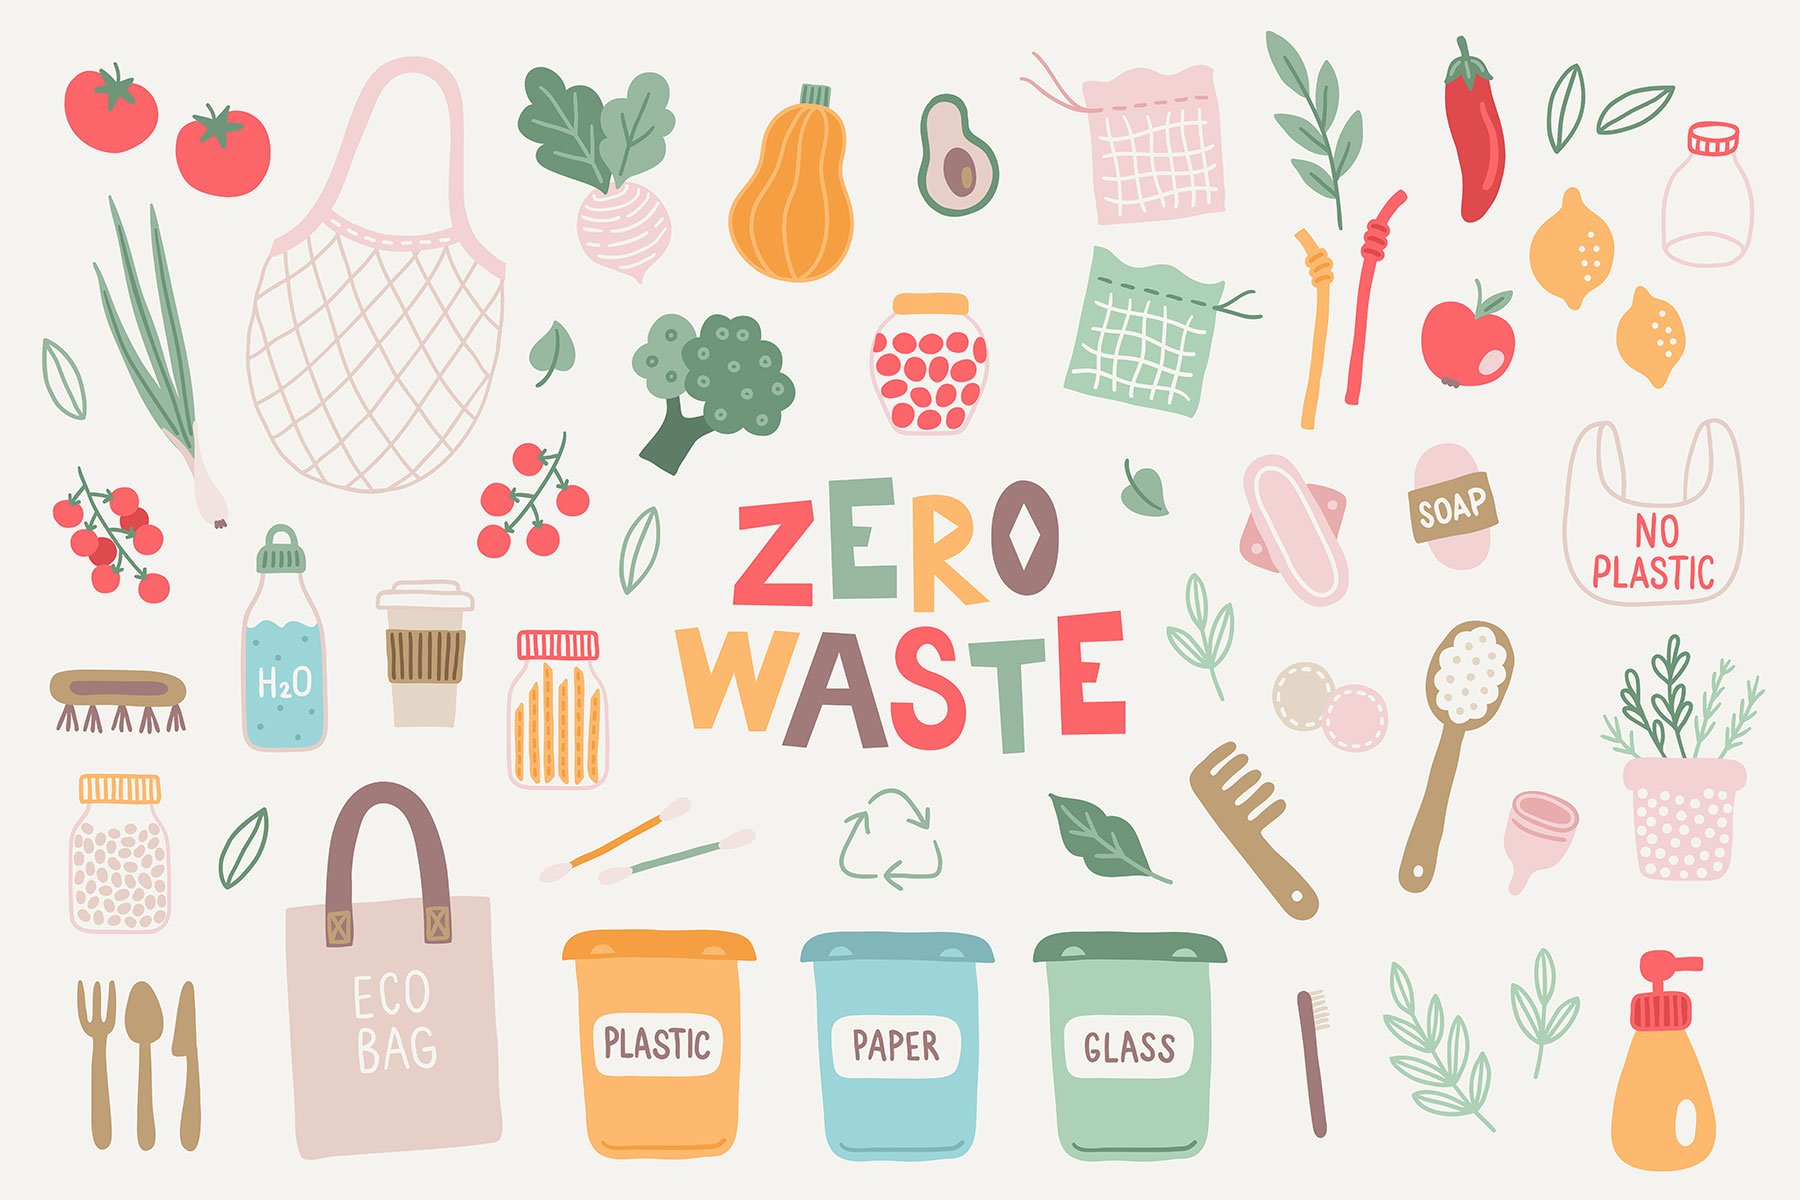 eco friendly alternatives to plastic